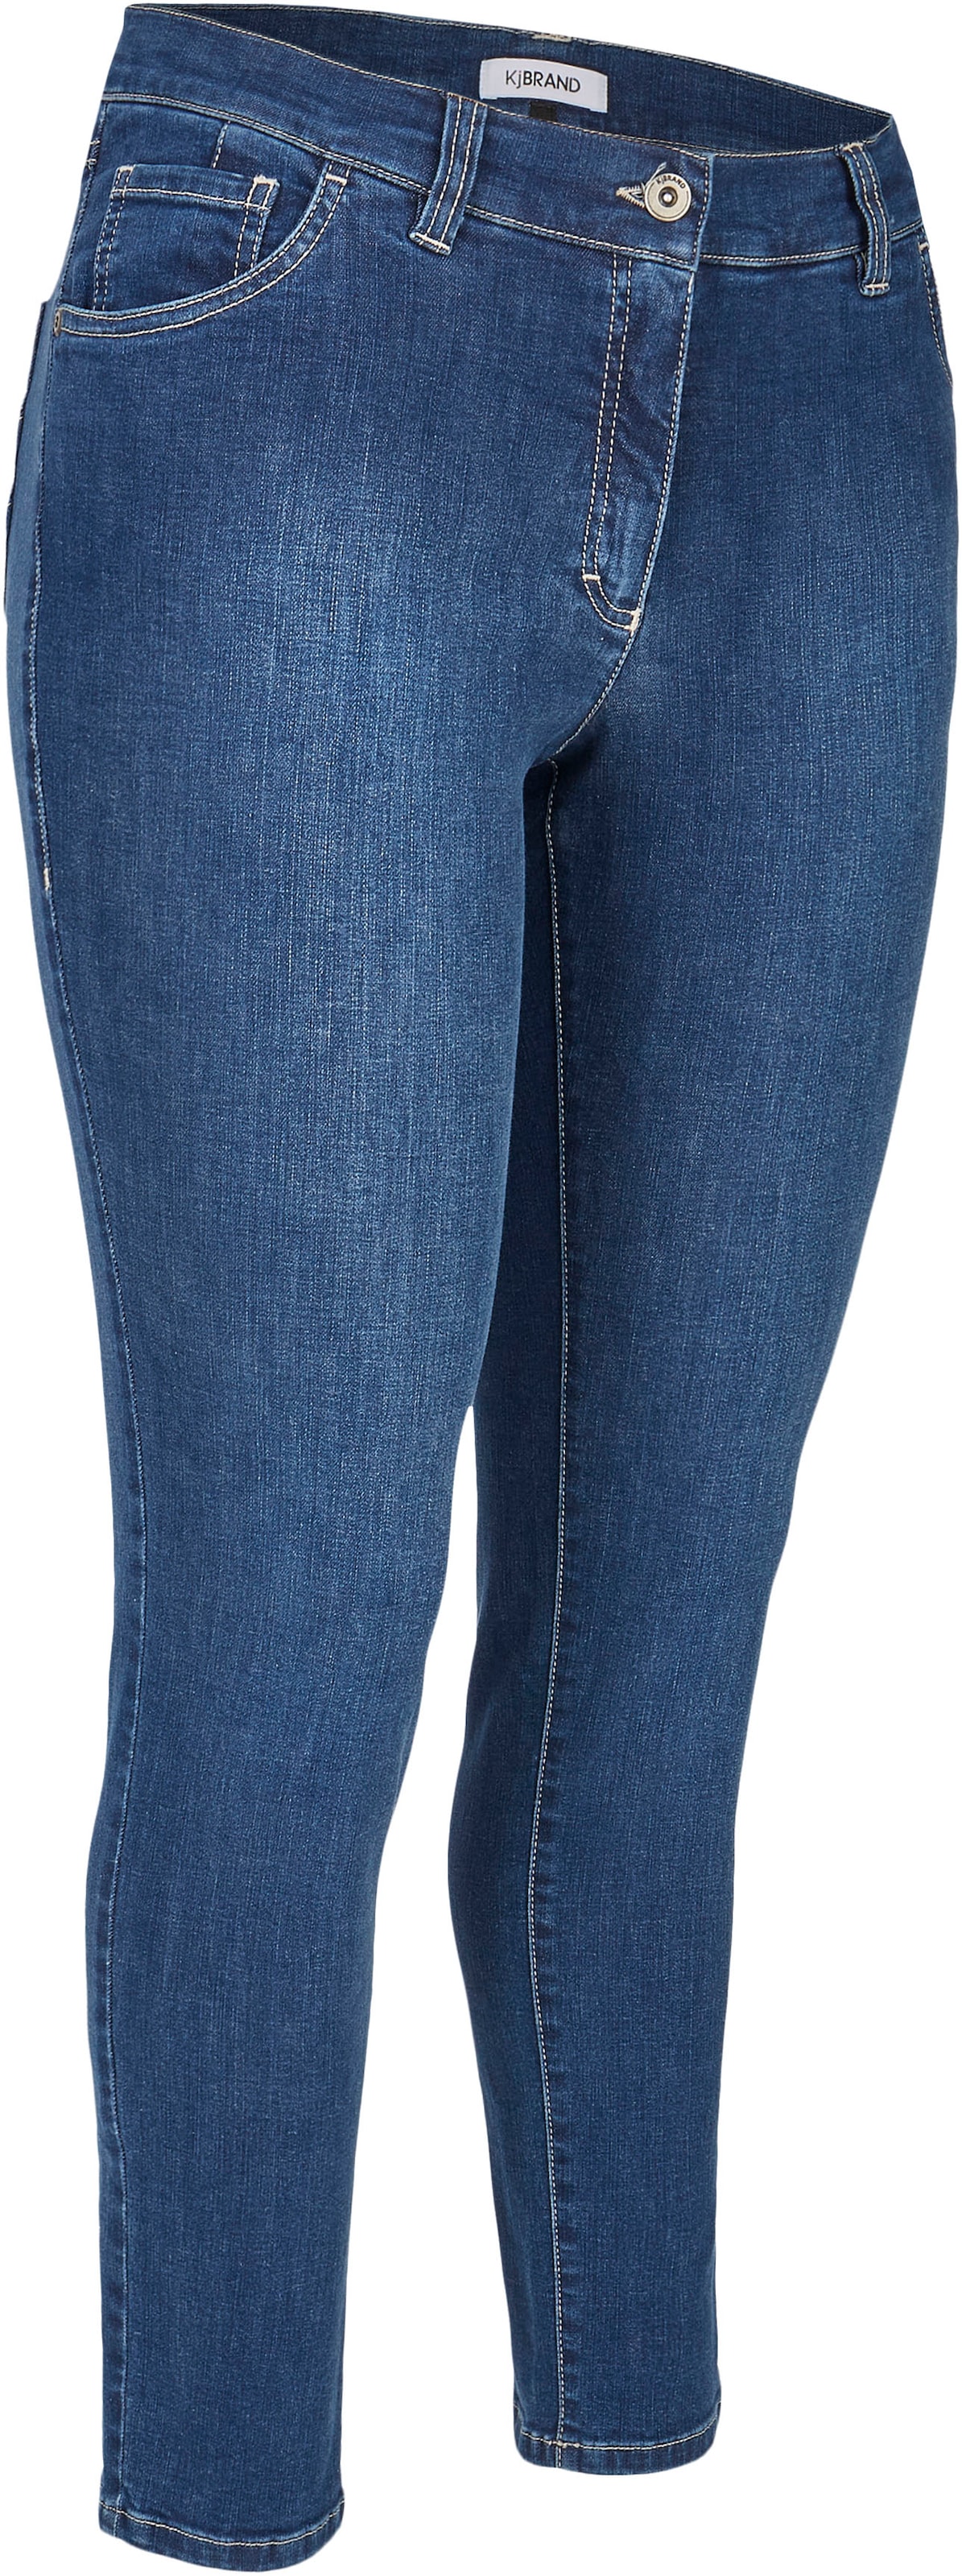 KjBRAND 5-Pocket-Jeans »Hose Fanni Skinny«, ideal für schlanke Beine